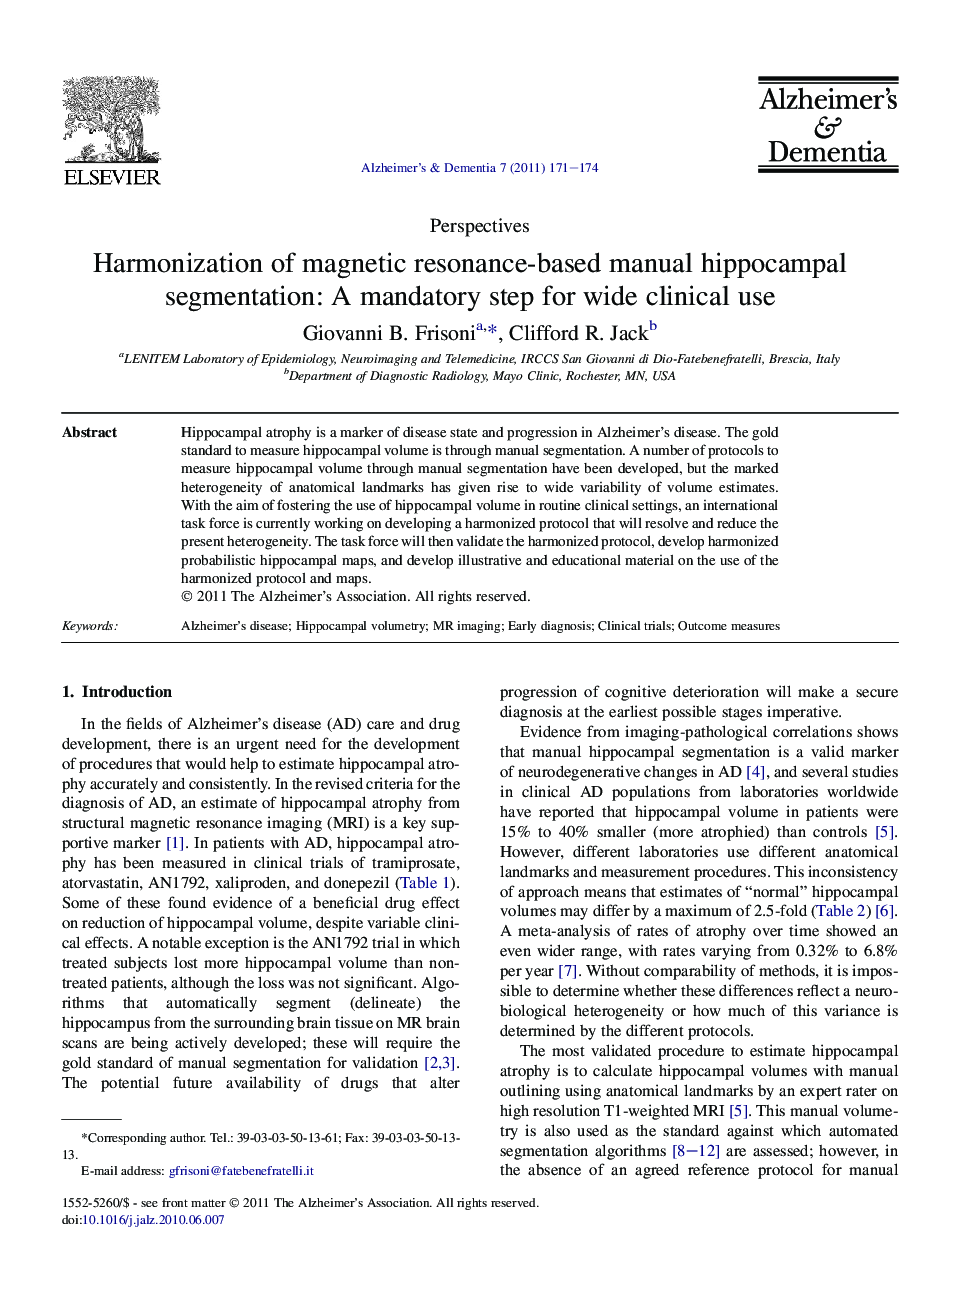 PerspectiveHarmonization of magnetic resonance-based manual hippocampal segmentation: A mandatory step for wide clinical use